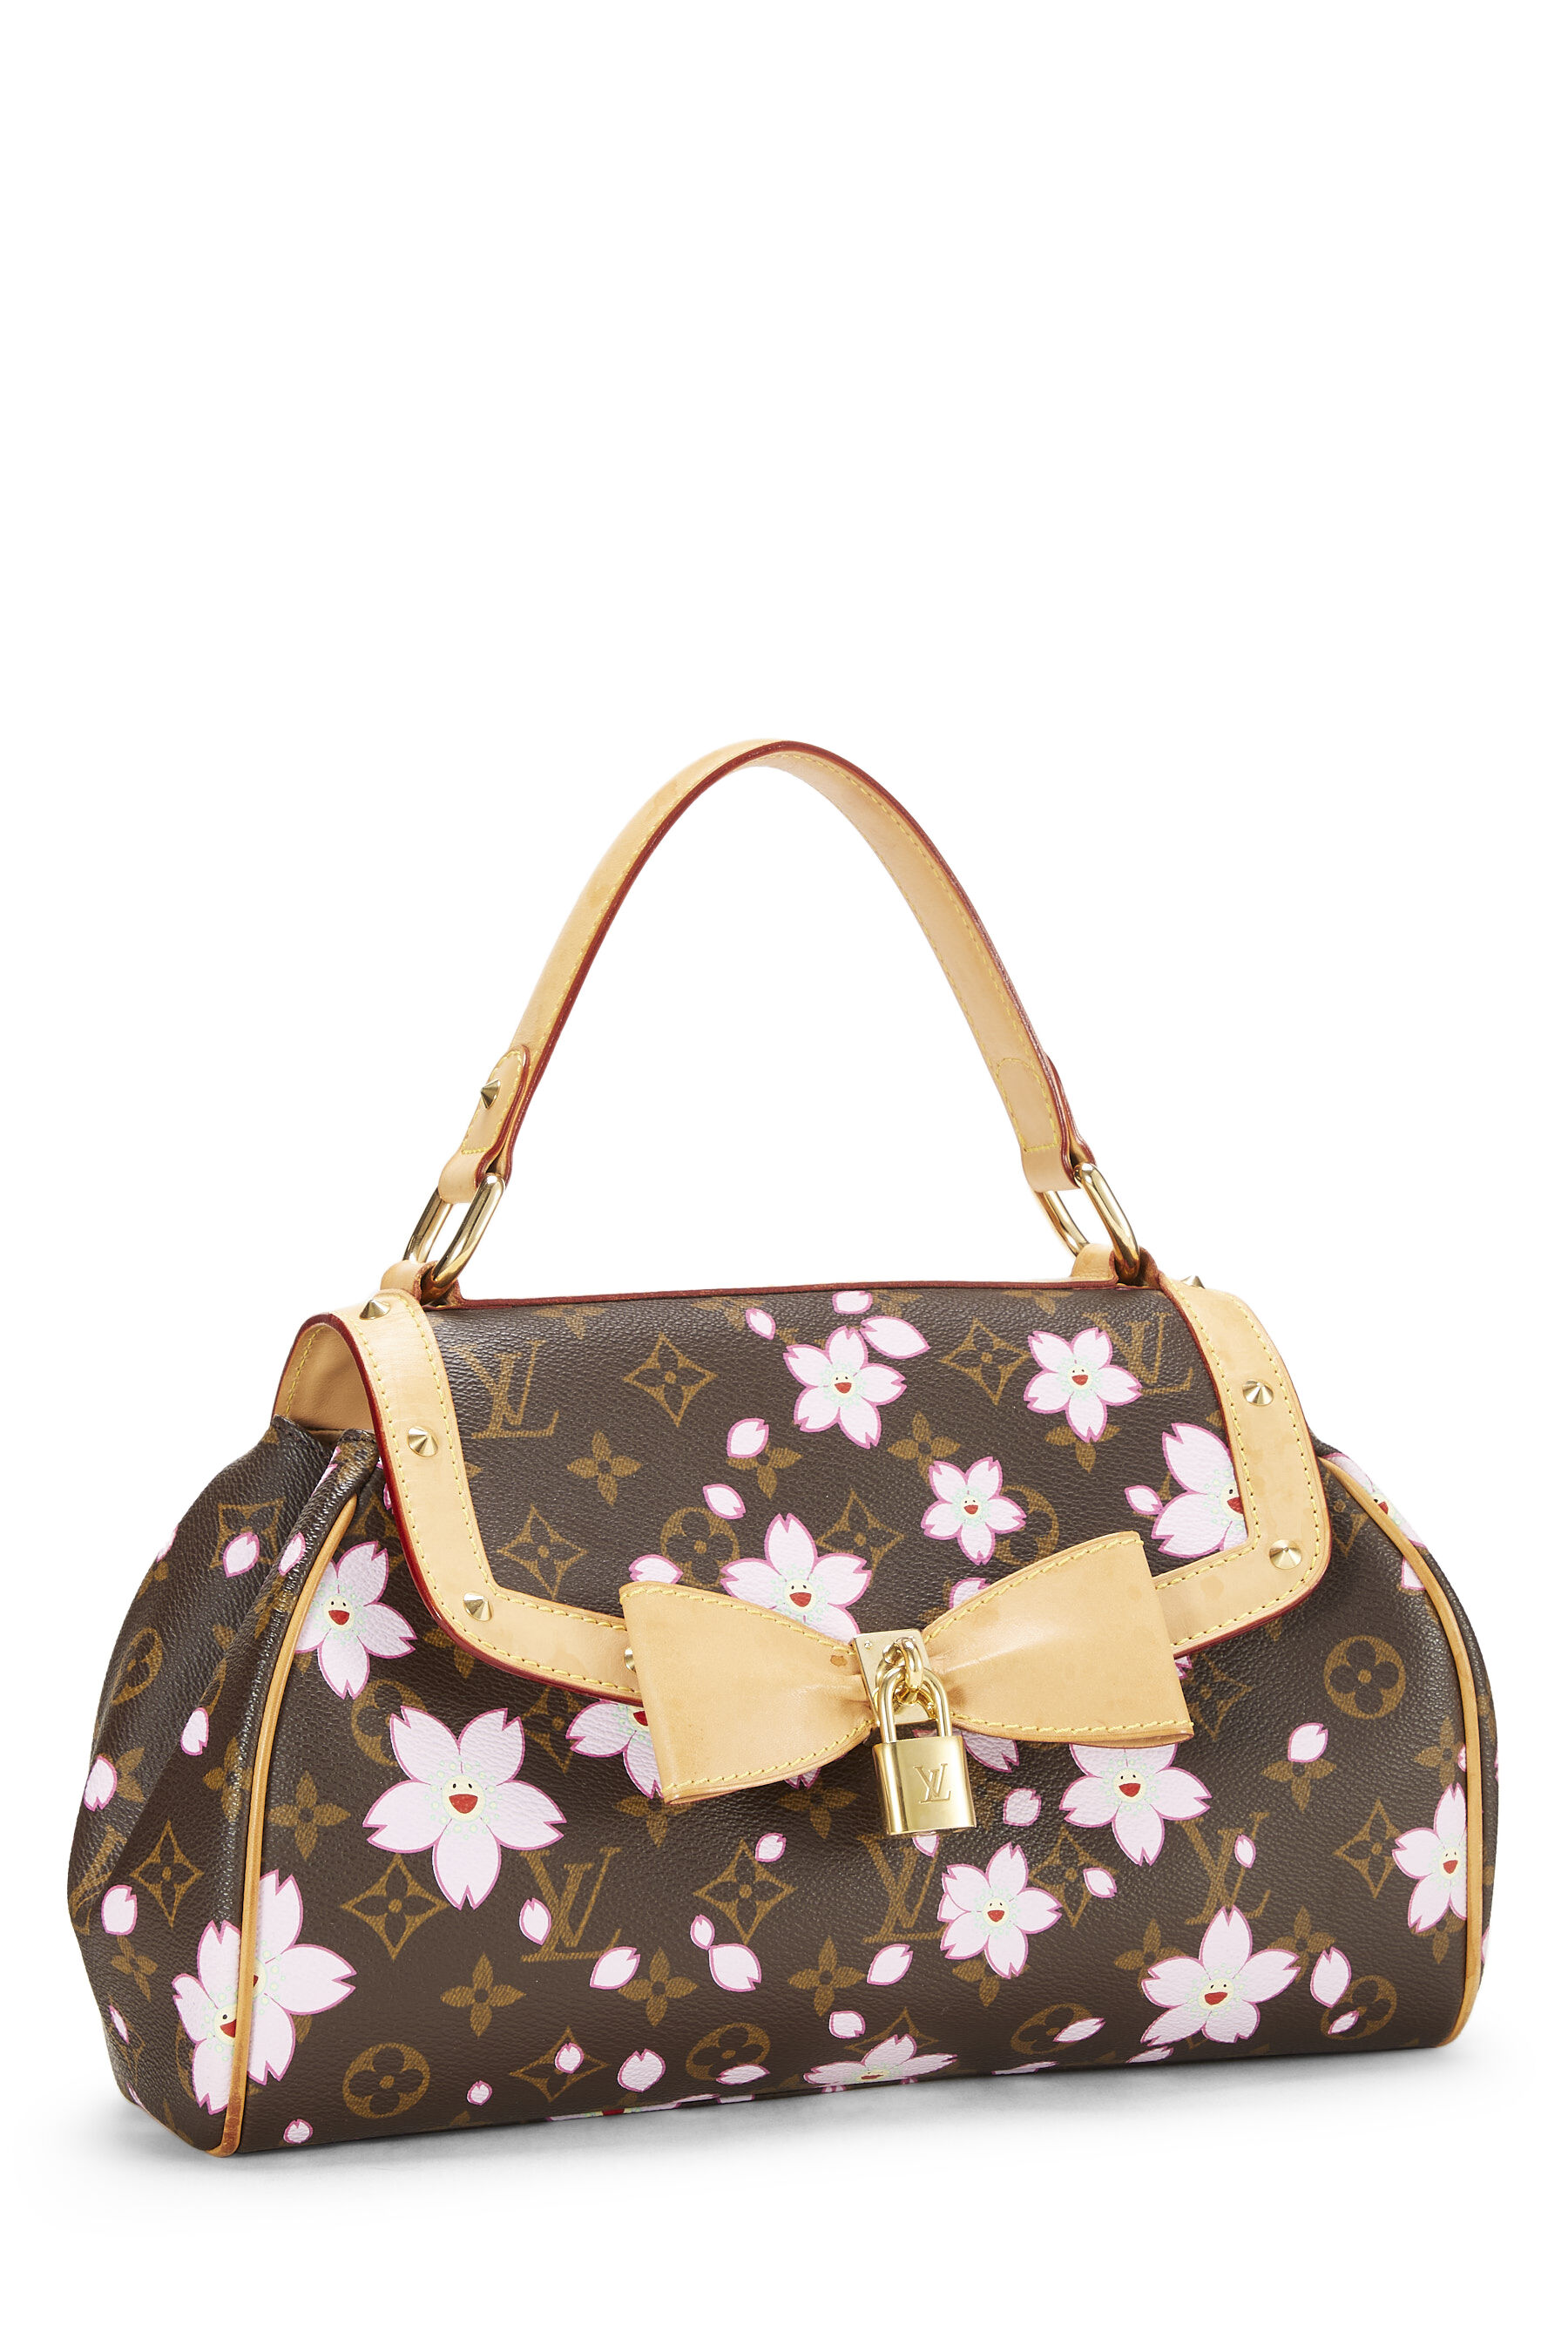 LOUIS VUITTON x Takashi Murakami Cherry Blossom Handbag Bag M92008